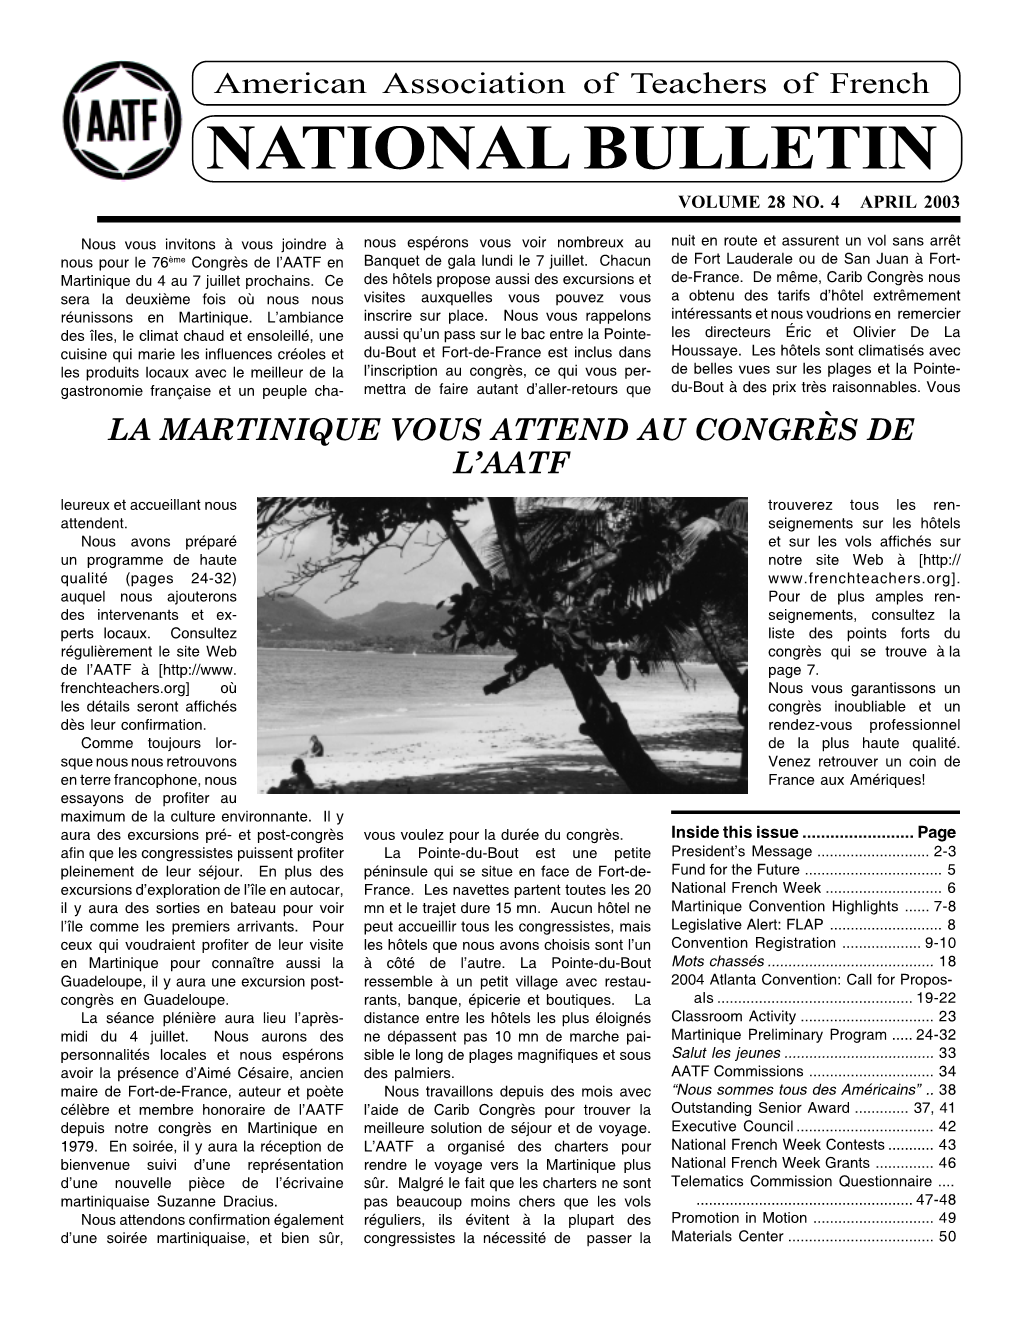 National Bulletin Volume 28 No